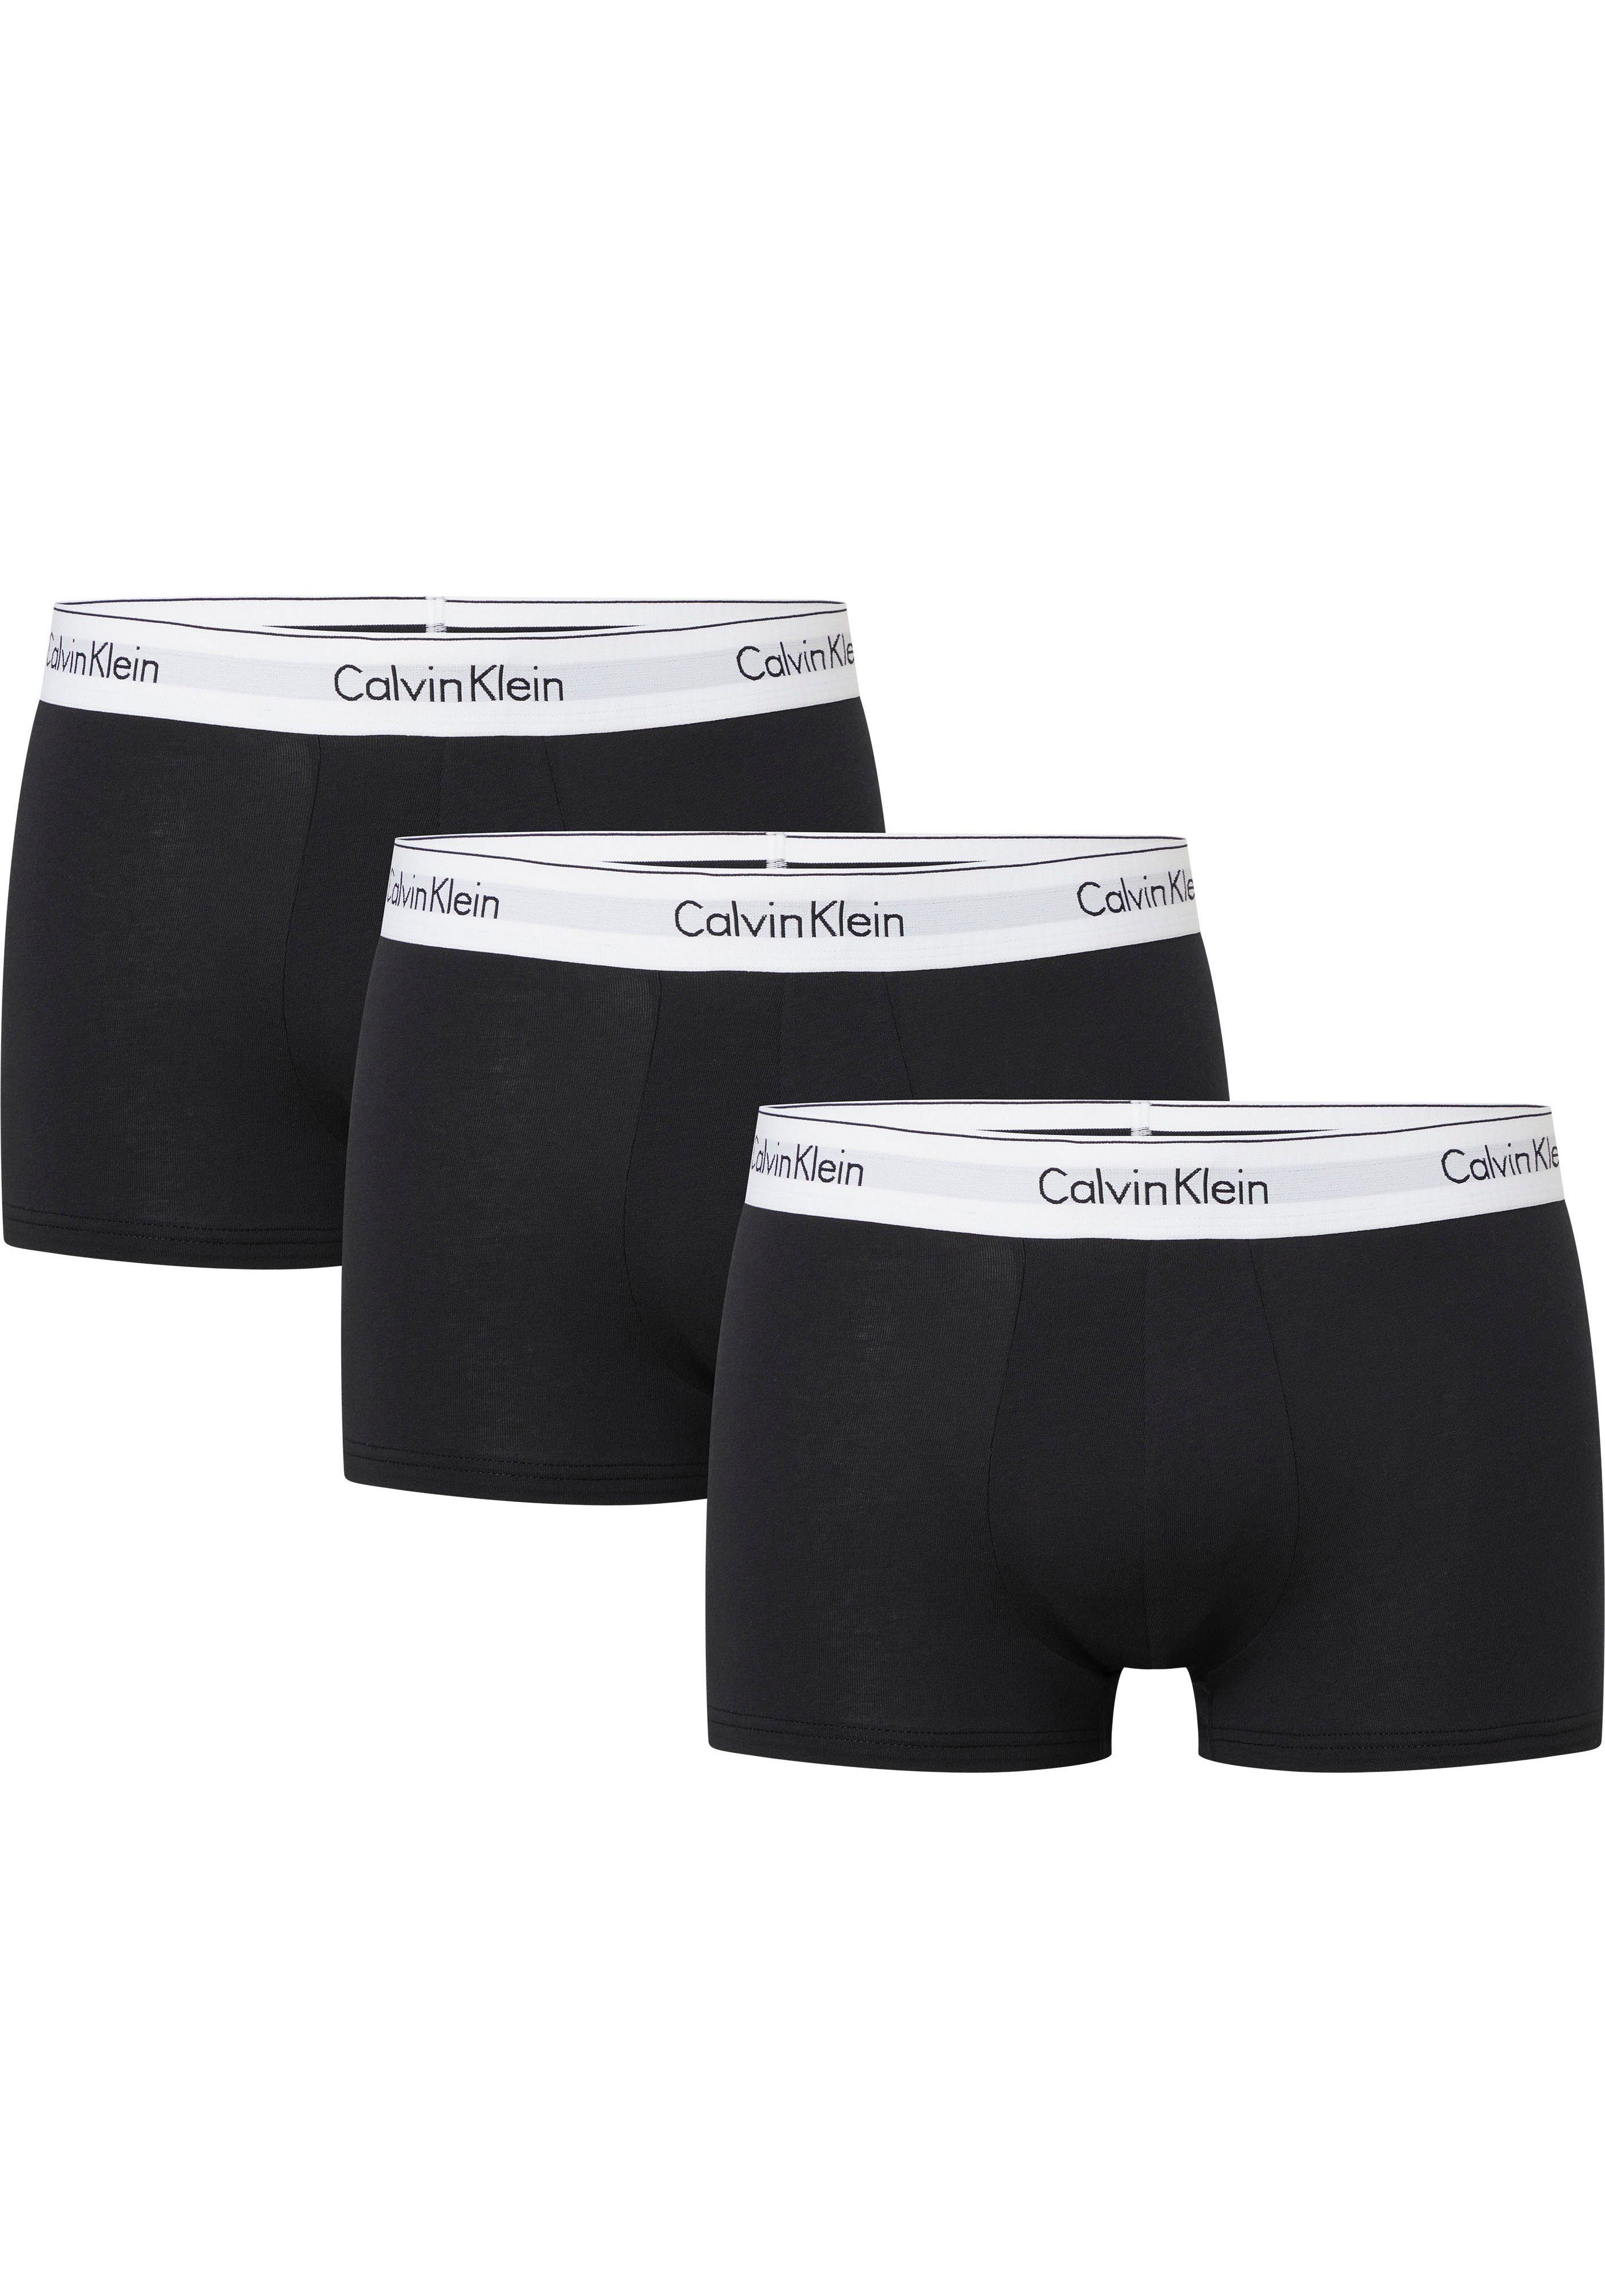 Calvin Klein Boxershort (set, 3 stuks, Set van 3)